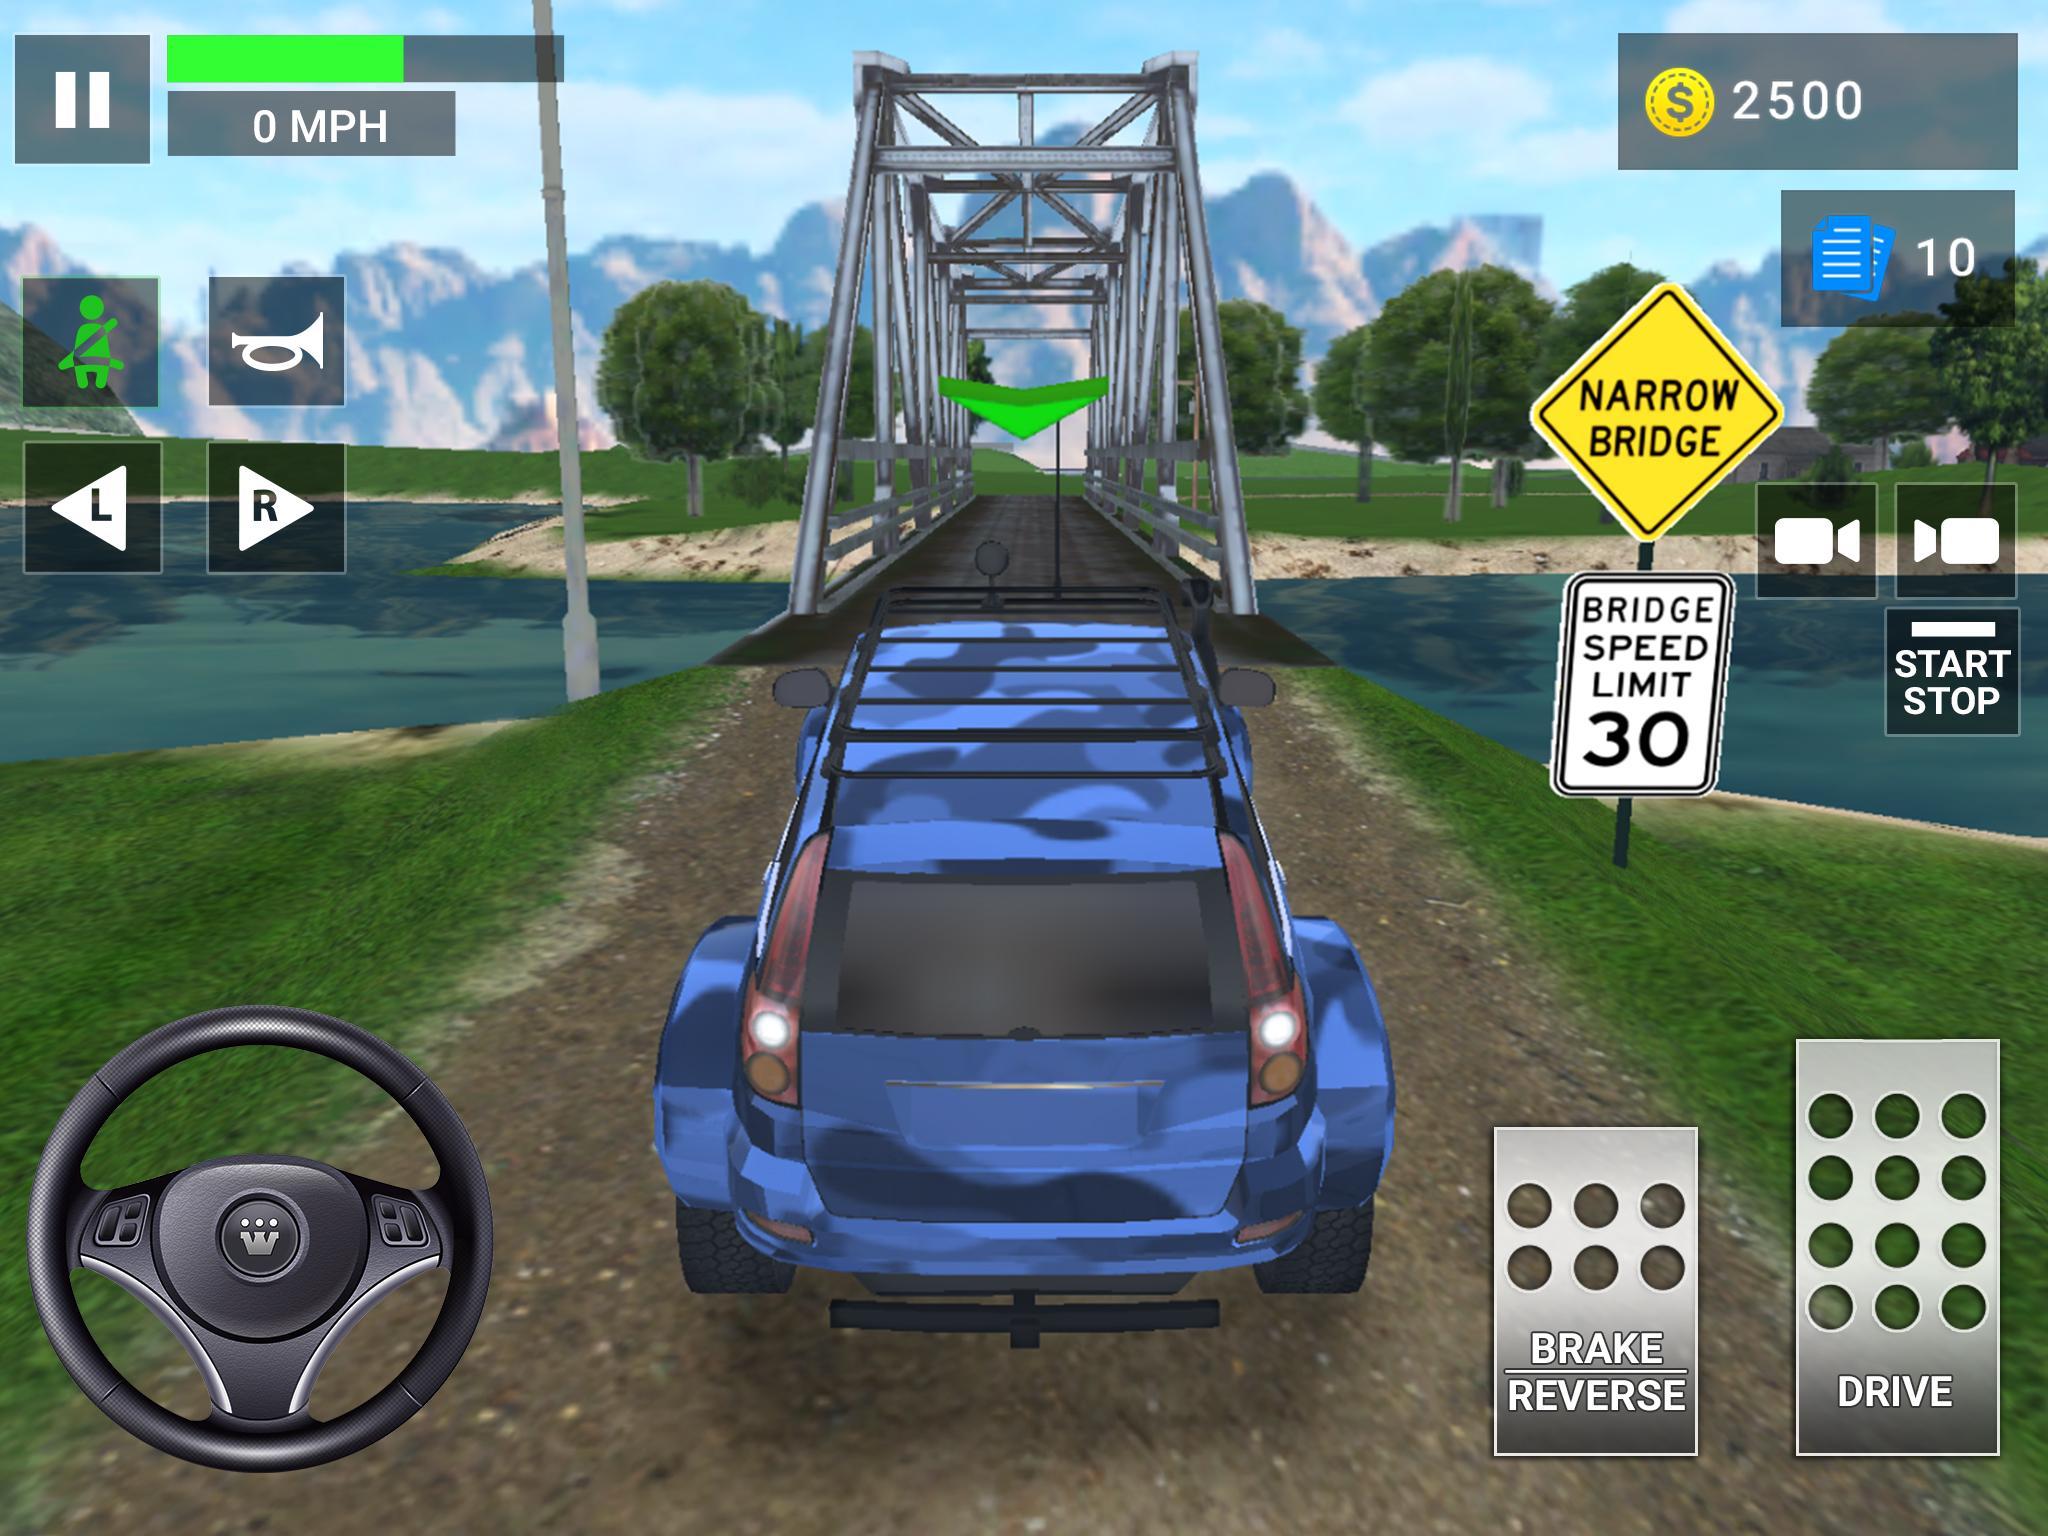 Driving Academy 2 Car Games & Driving School 2021 2.1 Screenshot 14